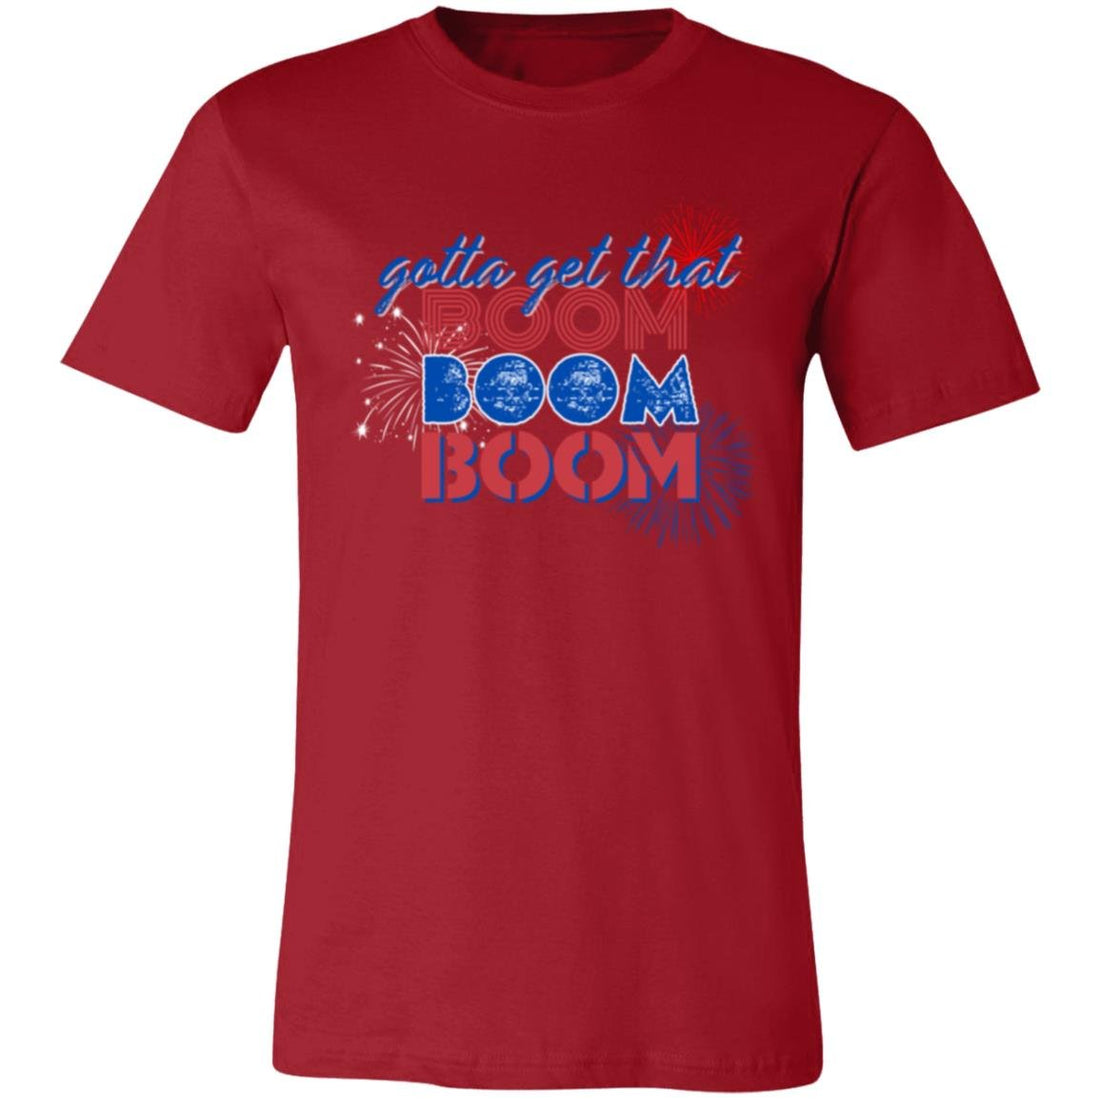 Boom Boom Boom T-Shirt - T-Shirts - Positively Sassy - Boom Boom Boom T-Shirt